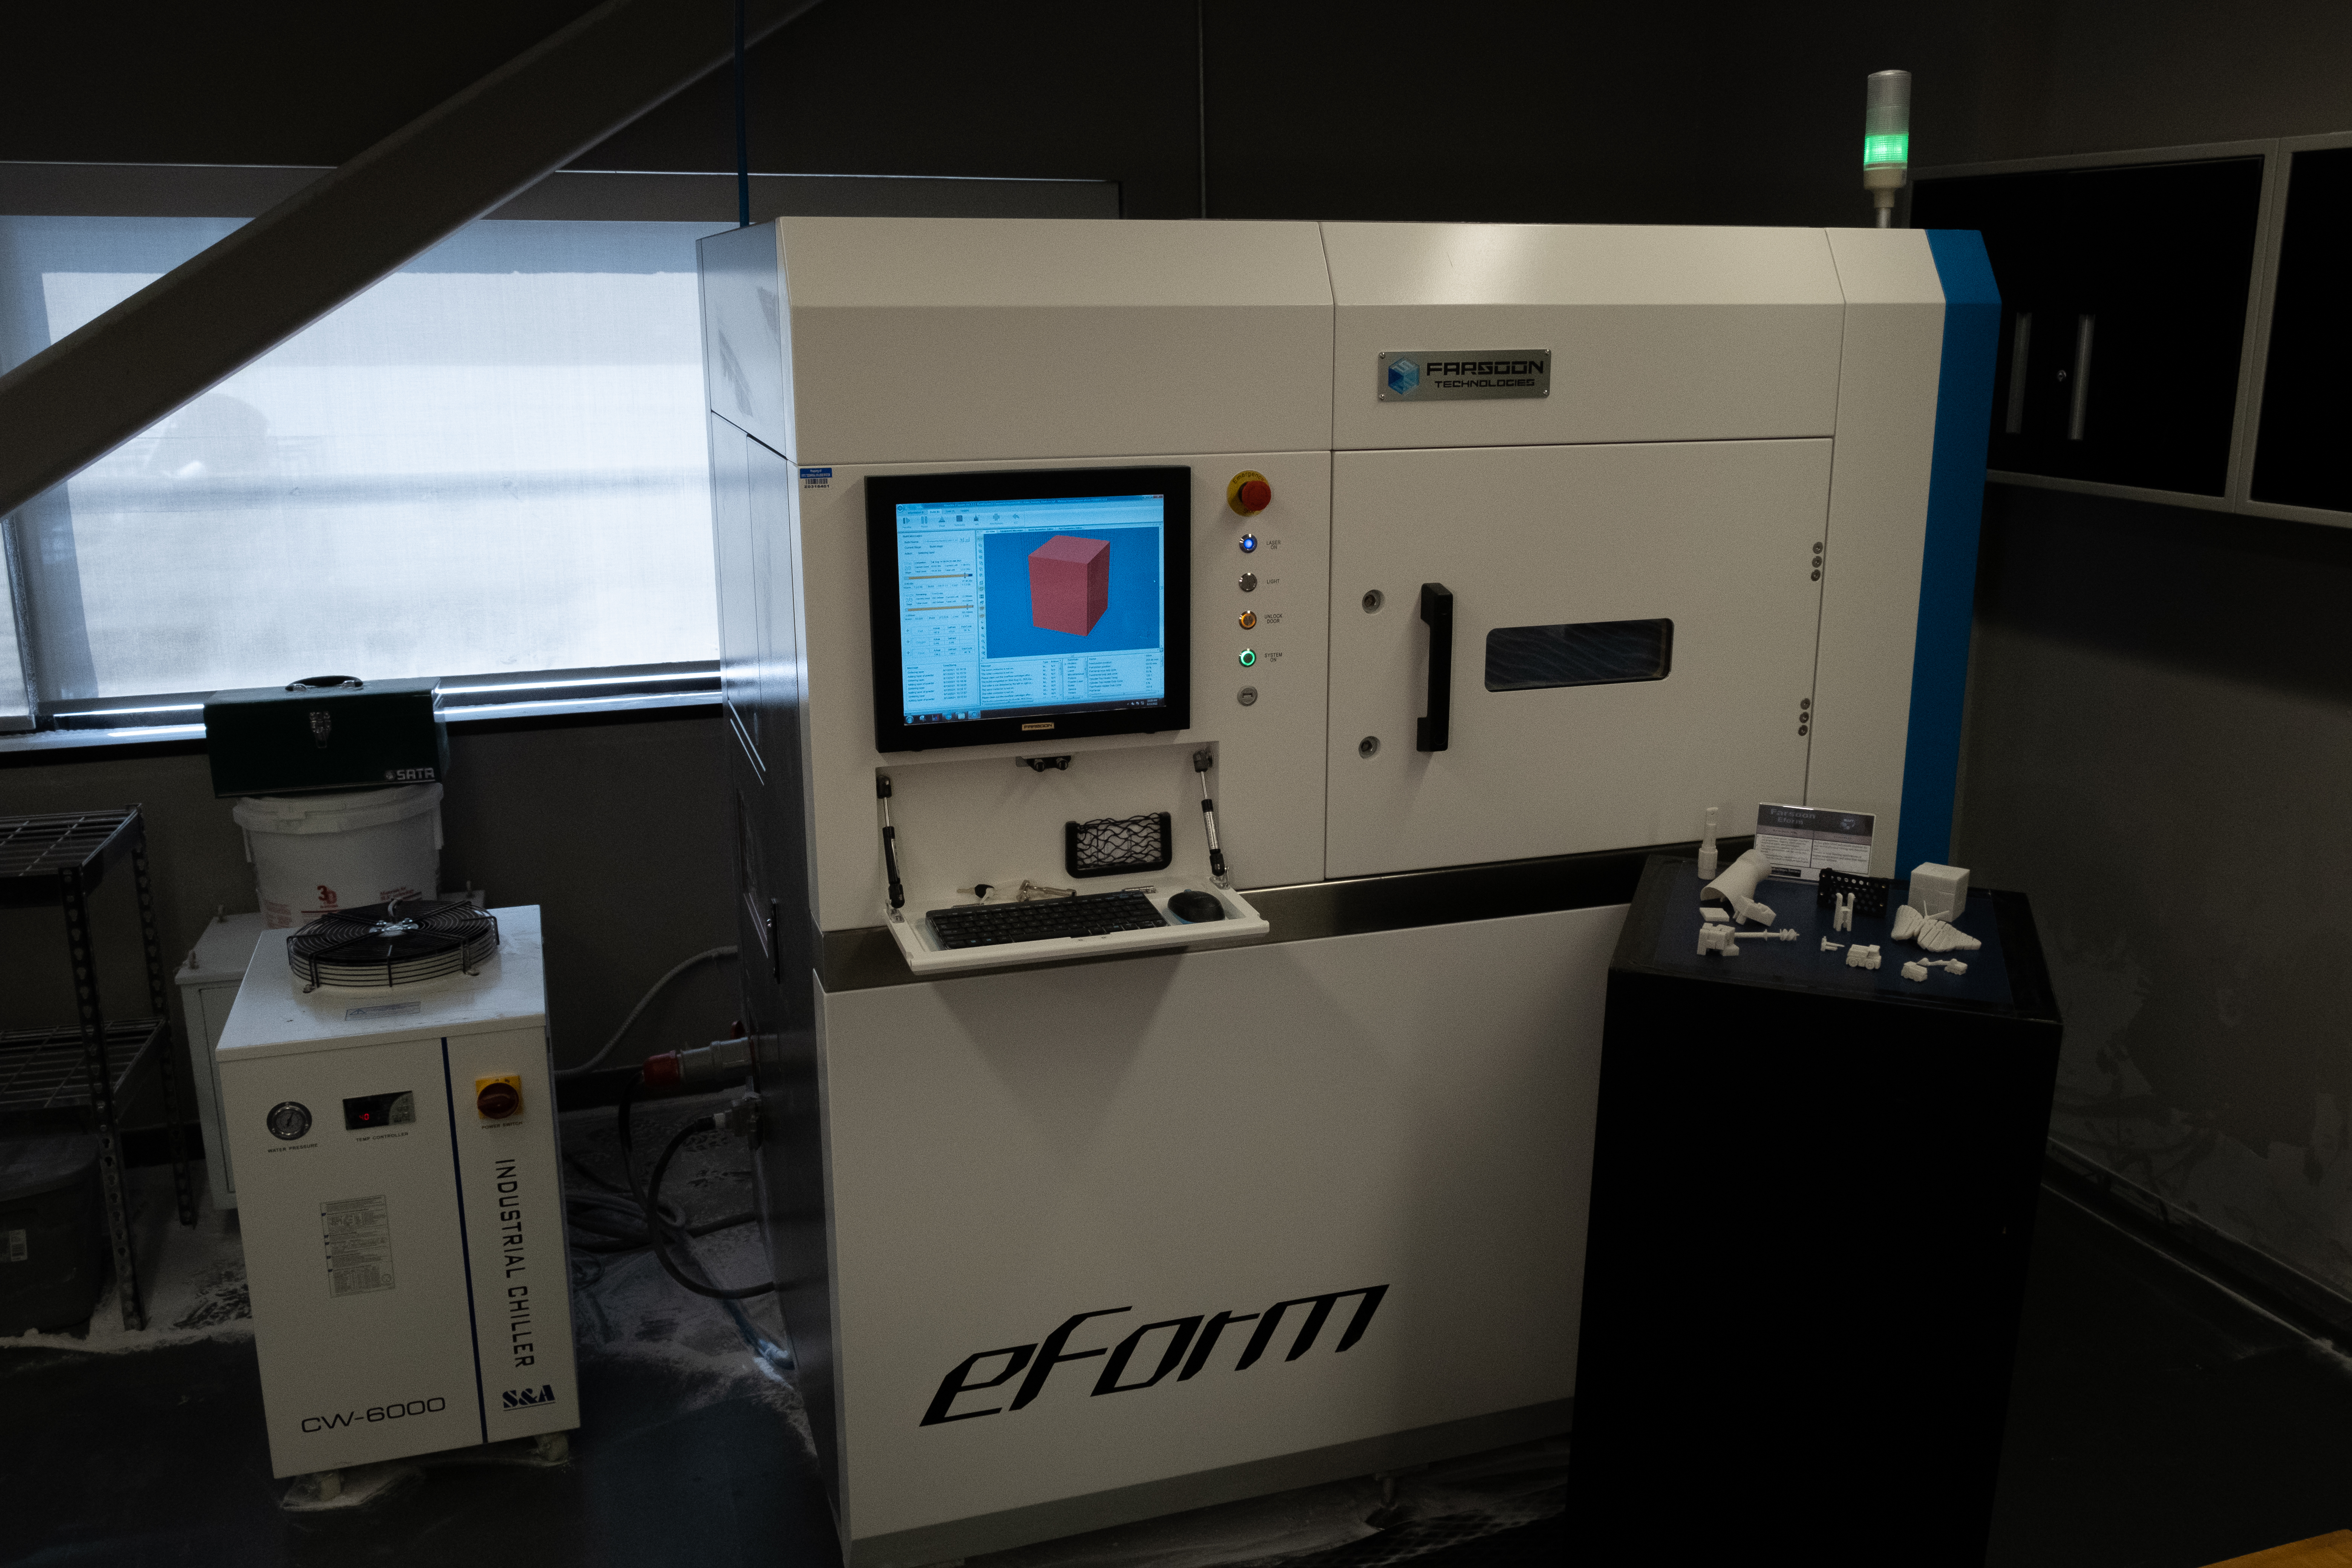 The SiMT's Farsoon Eform 3D printer.